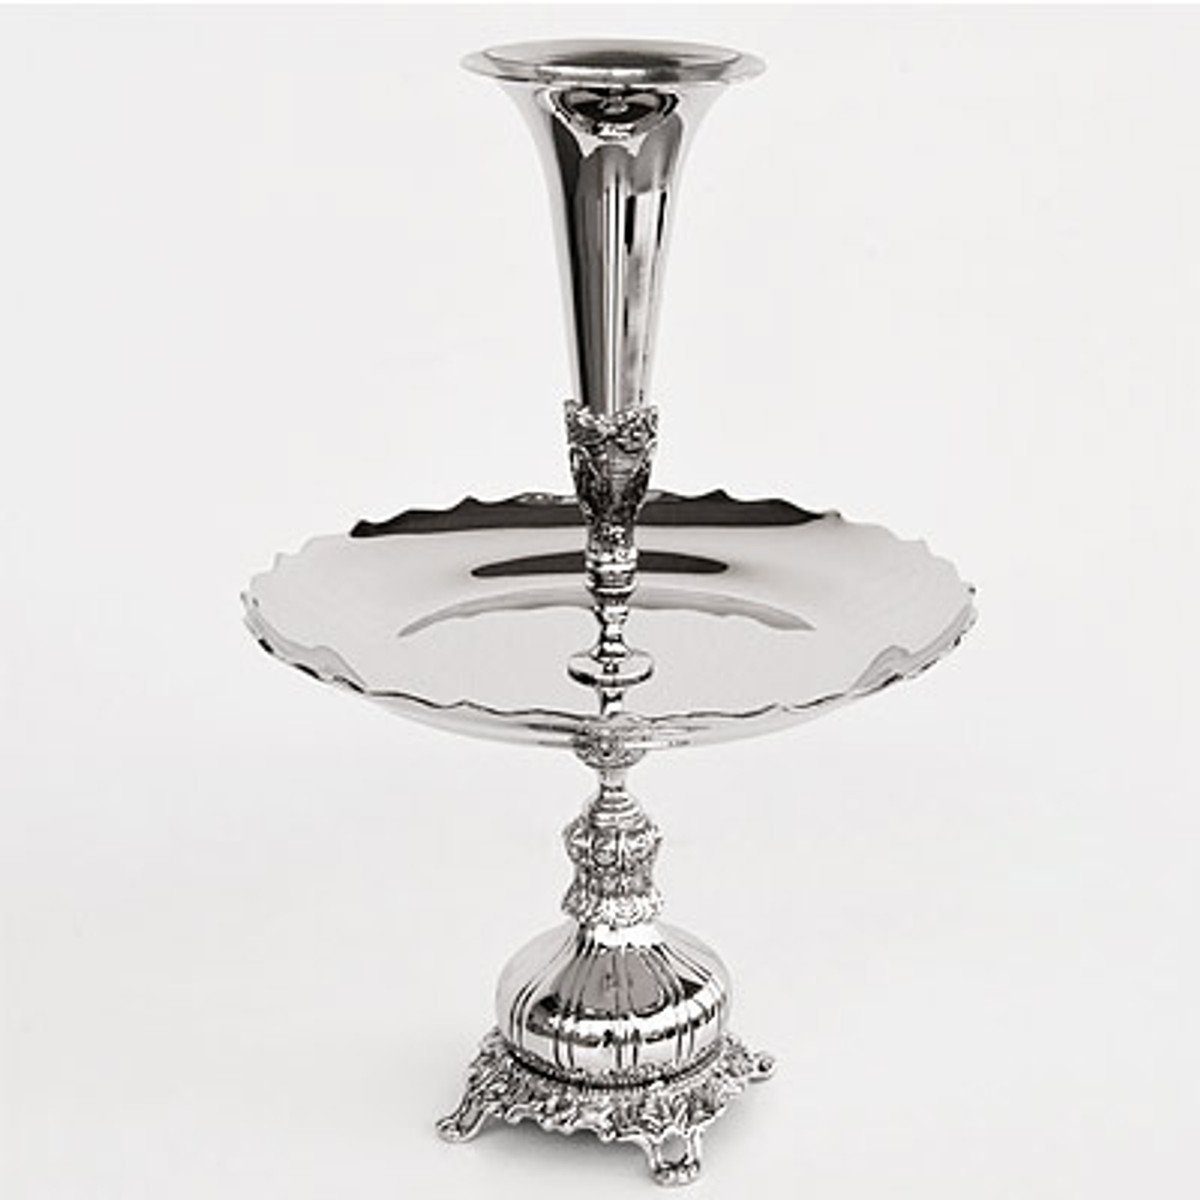 Padrino Dekoobjekt Etagere - - Casa Obstvase Barock Luxus Hotel - Dekoration Silber Blumengefäss Vase